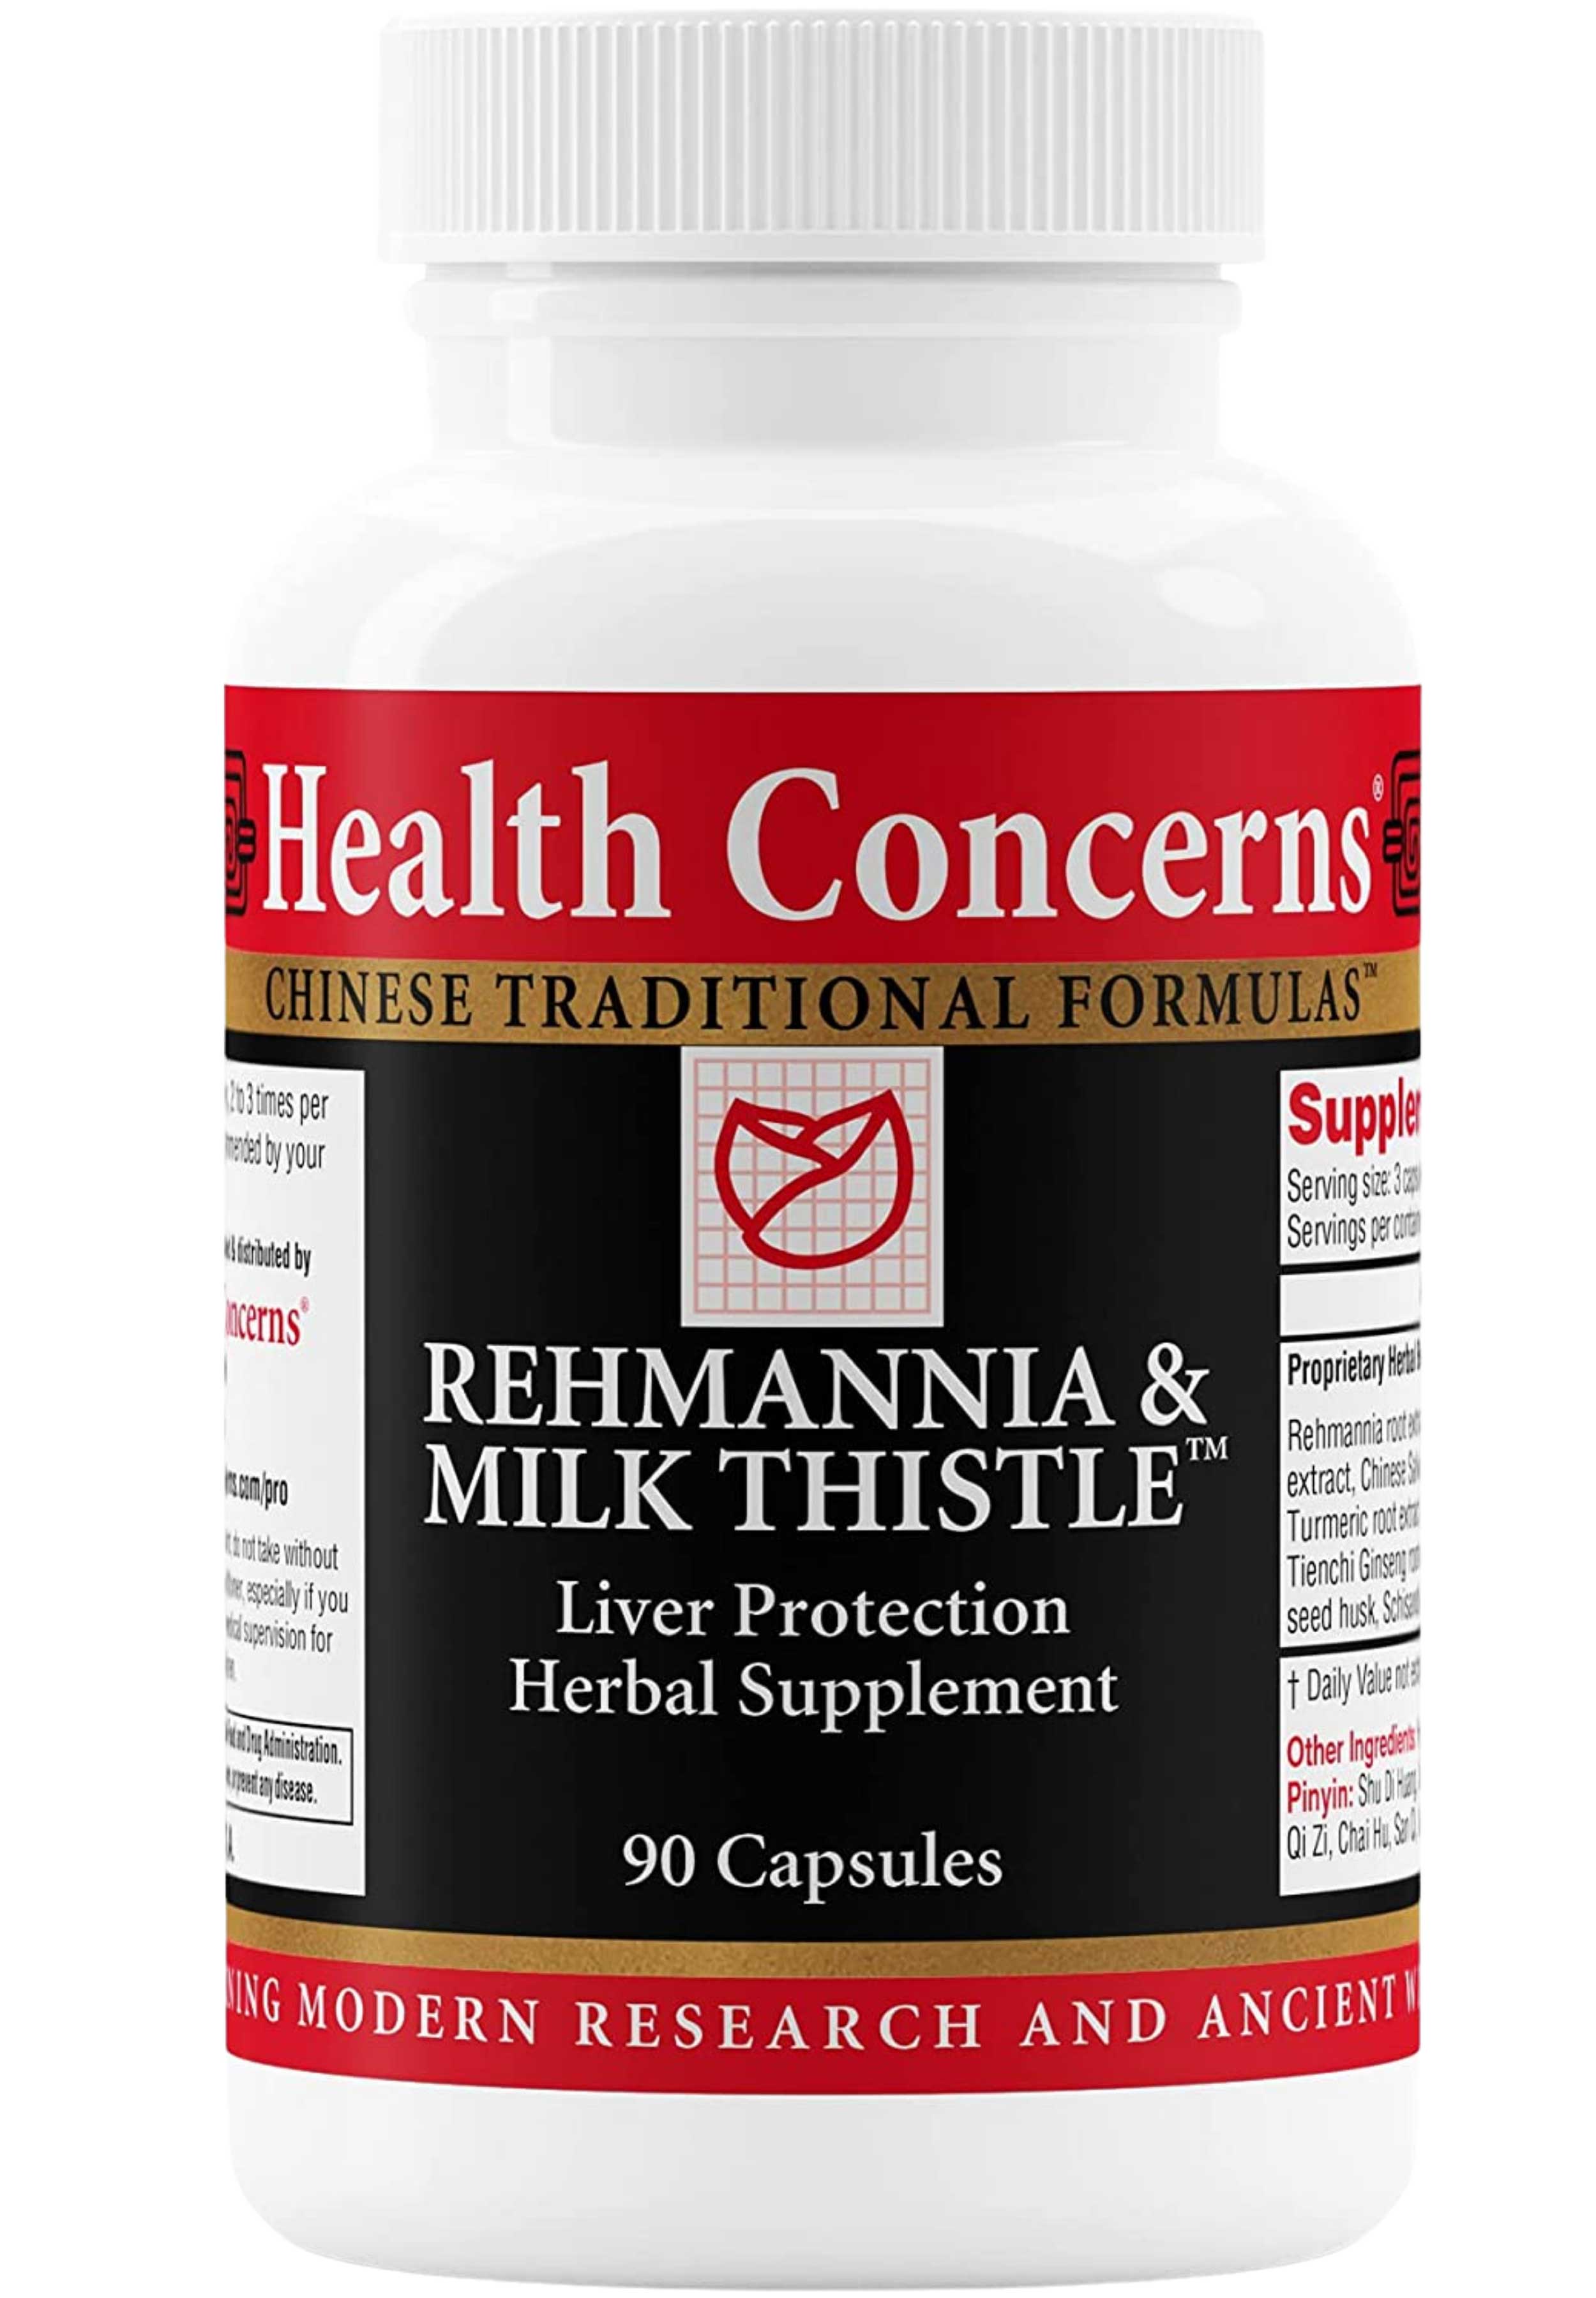 Health Concerns Rehmannia & Milk Thistle (Formerly Ecliptex)